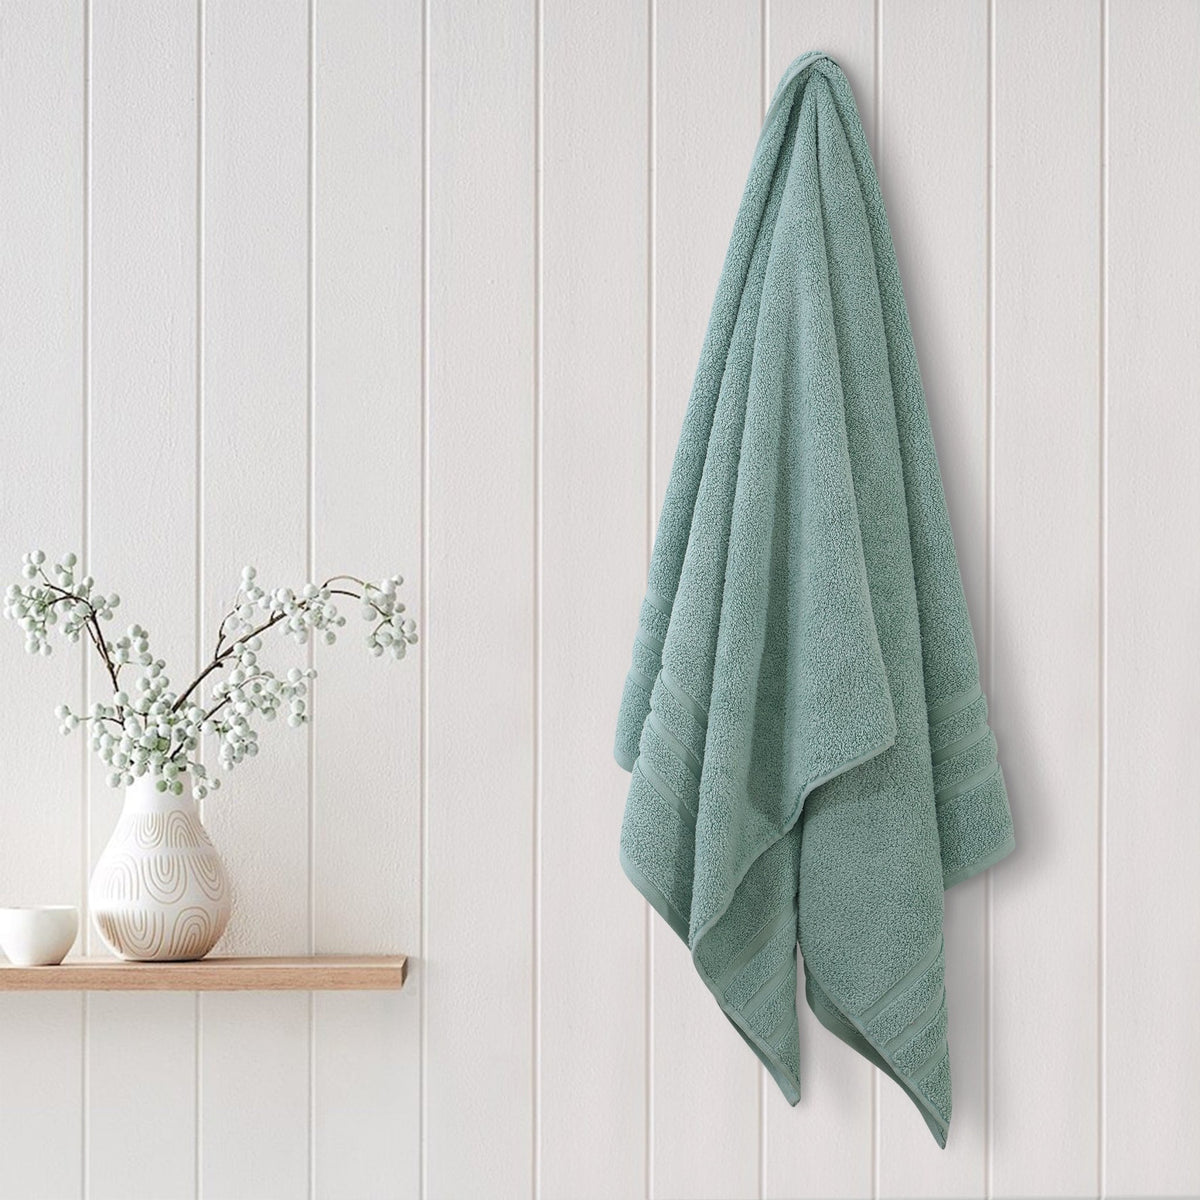 Malako Green 100% Cotton Zero Twist Towel (600GSM) - MALAKO